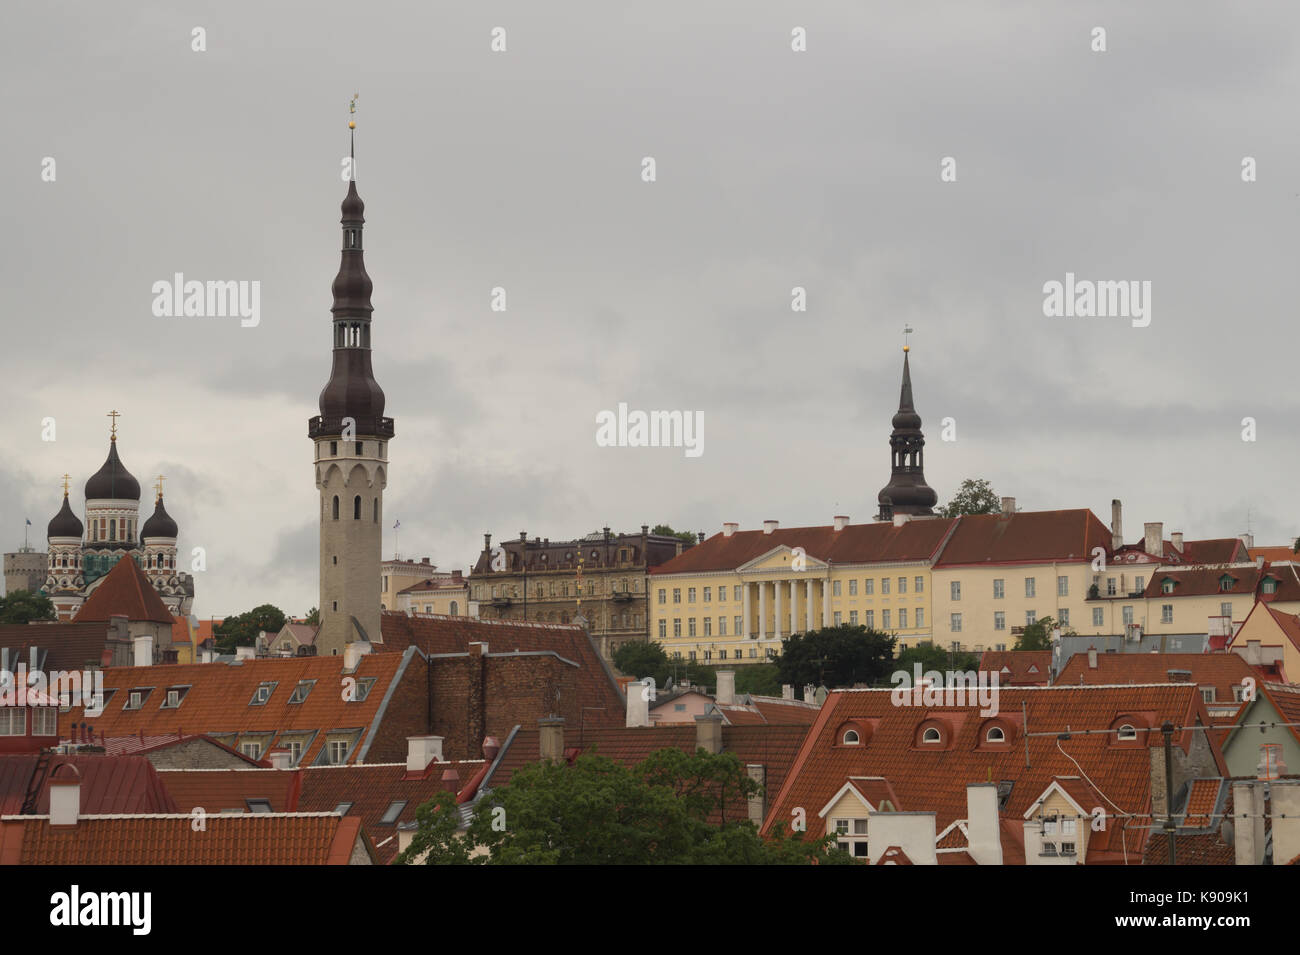 Cityscape with old castle towers of Tallinn Estonia Stock Photo